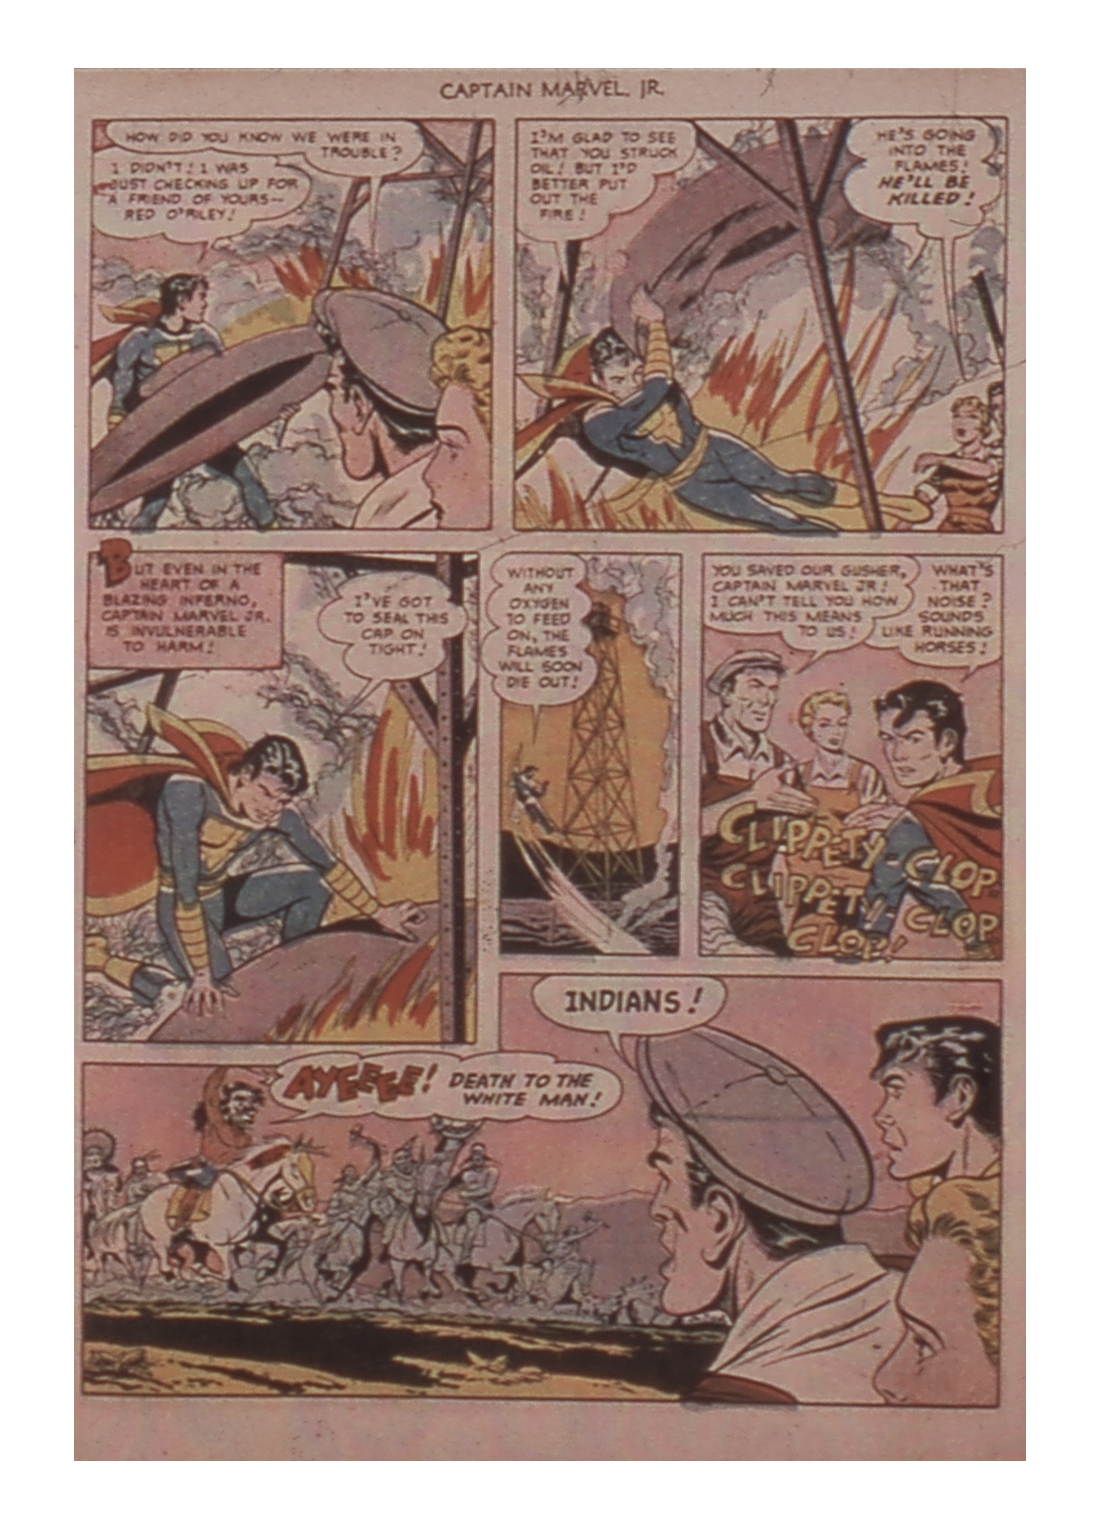 Read online Captain Marvel, Jr. comic -  Issue #94 - 6